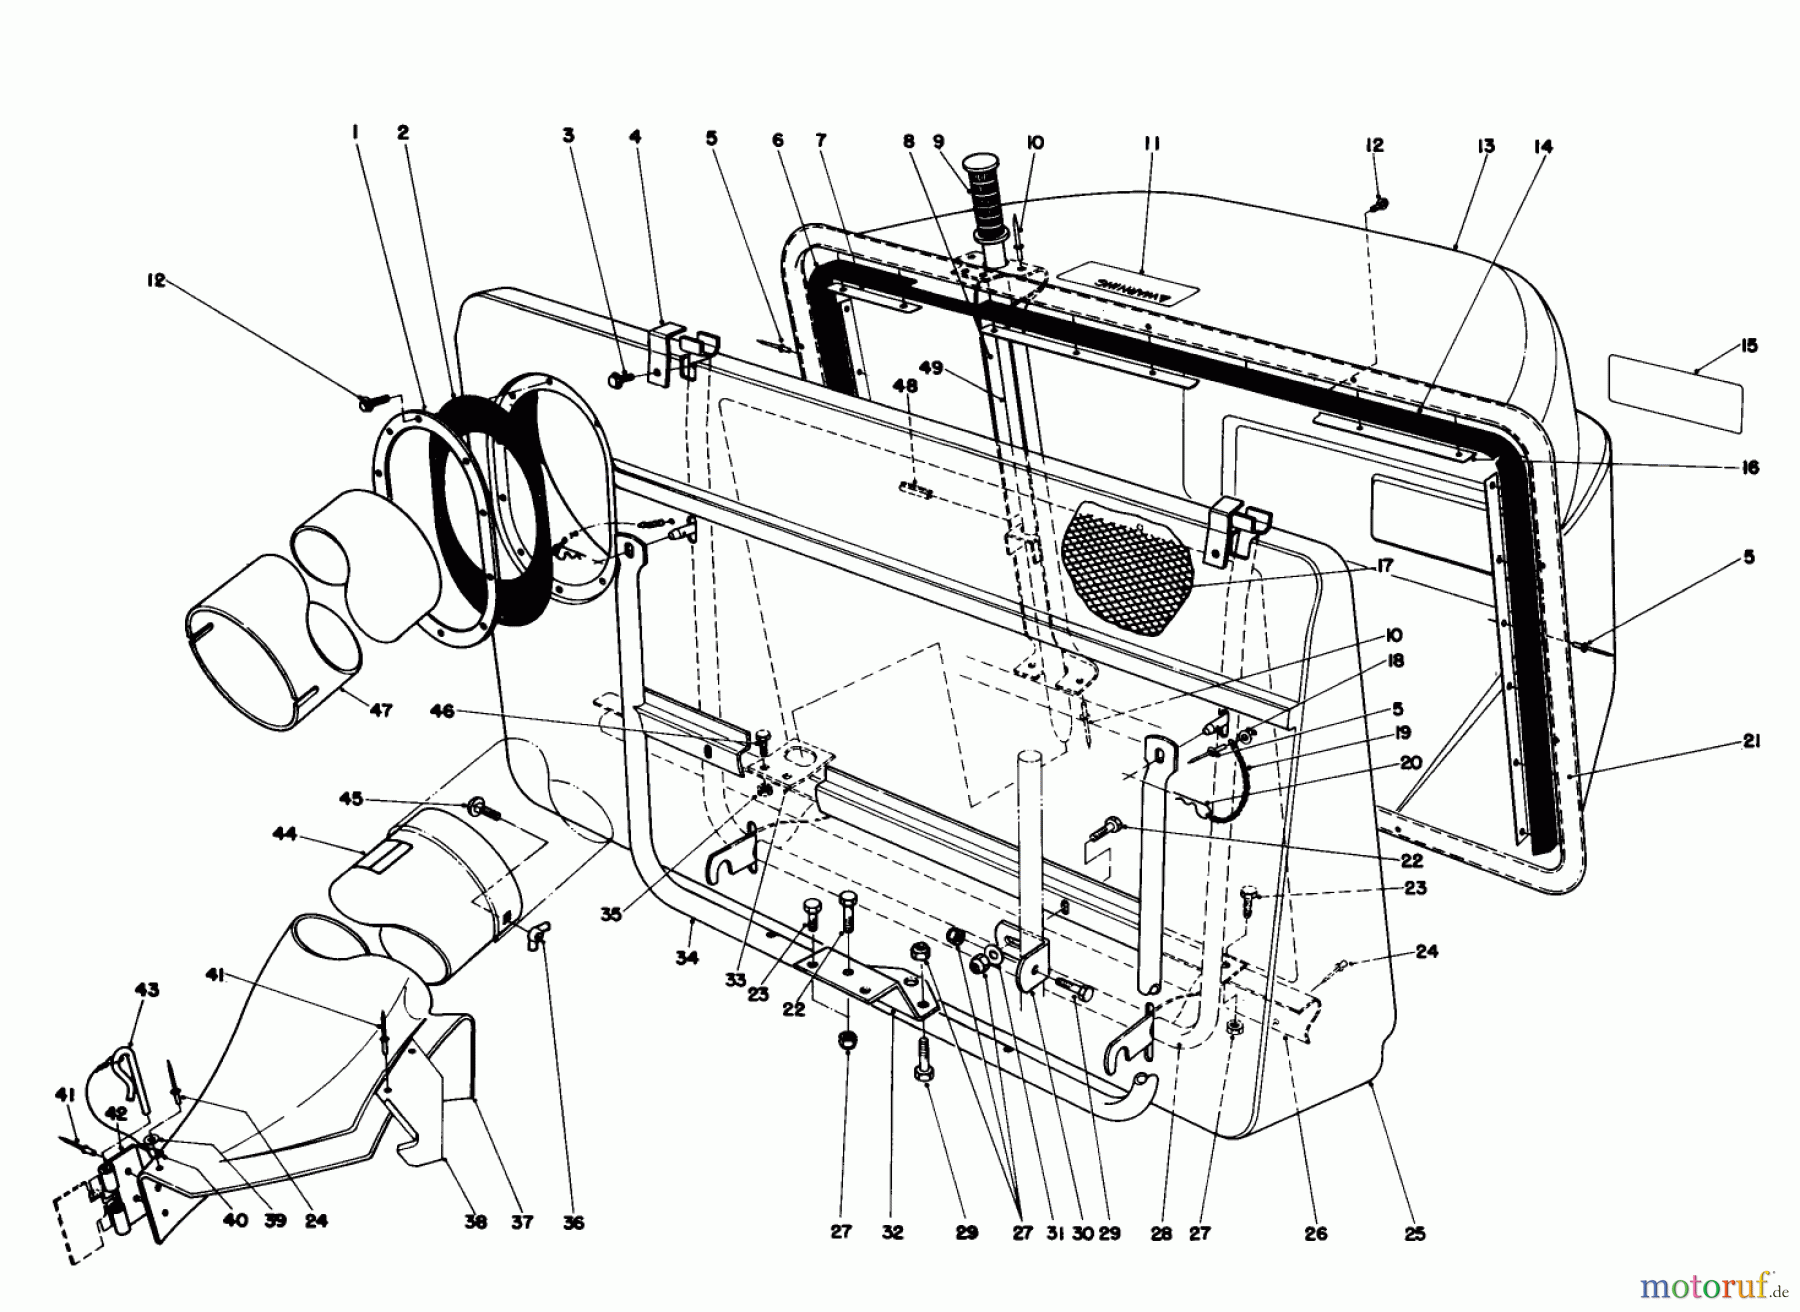  Toro Neu Mowers, Lawn & Garden Tractor Seite 1 57300 (8-32) - Toro 8-32 Front Engine Rider, 1985 (5000001-5999999) EASY-EMPTY GRASS CATCHER MODEL 59111 (OPTIONAL)